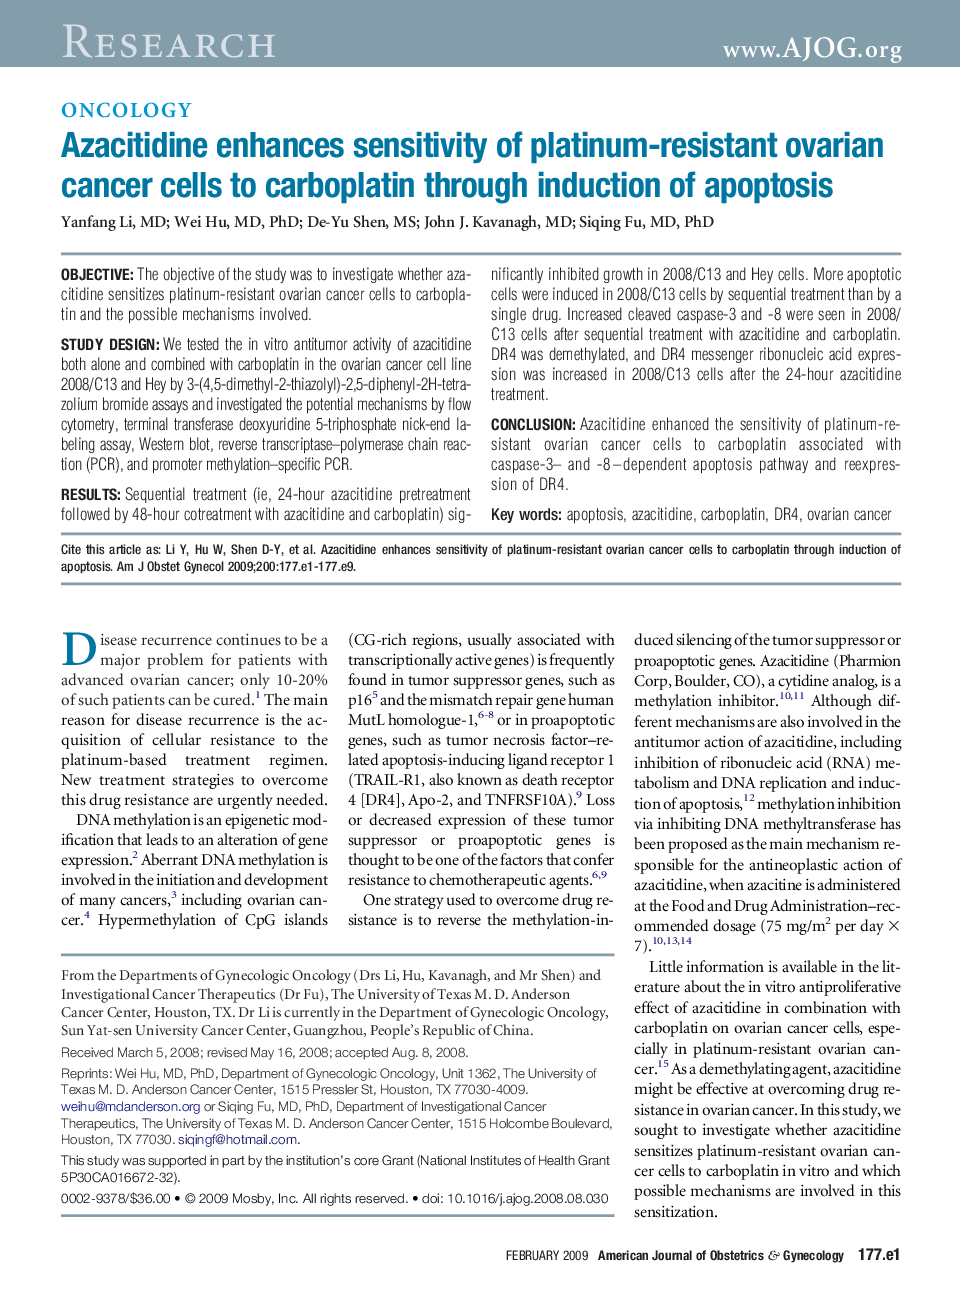 Azacitidine enhances sensitivity of platinum-resistant ovarian cancer cells to carboplatin through induction of apoptosis